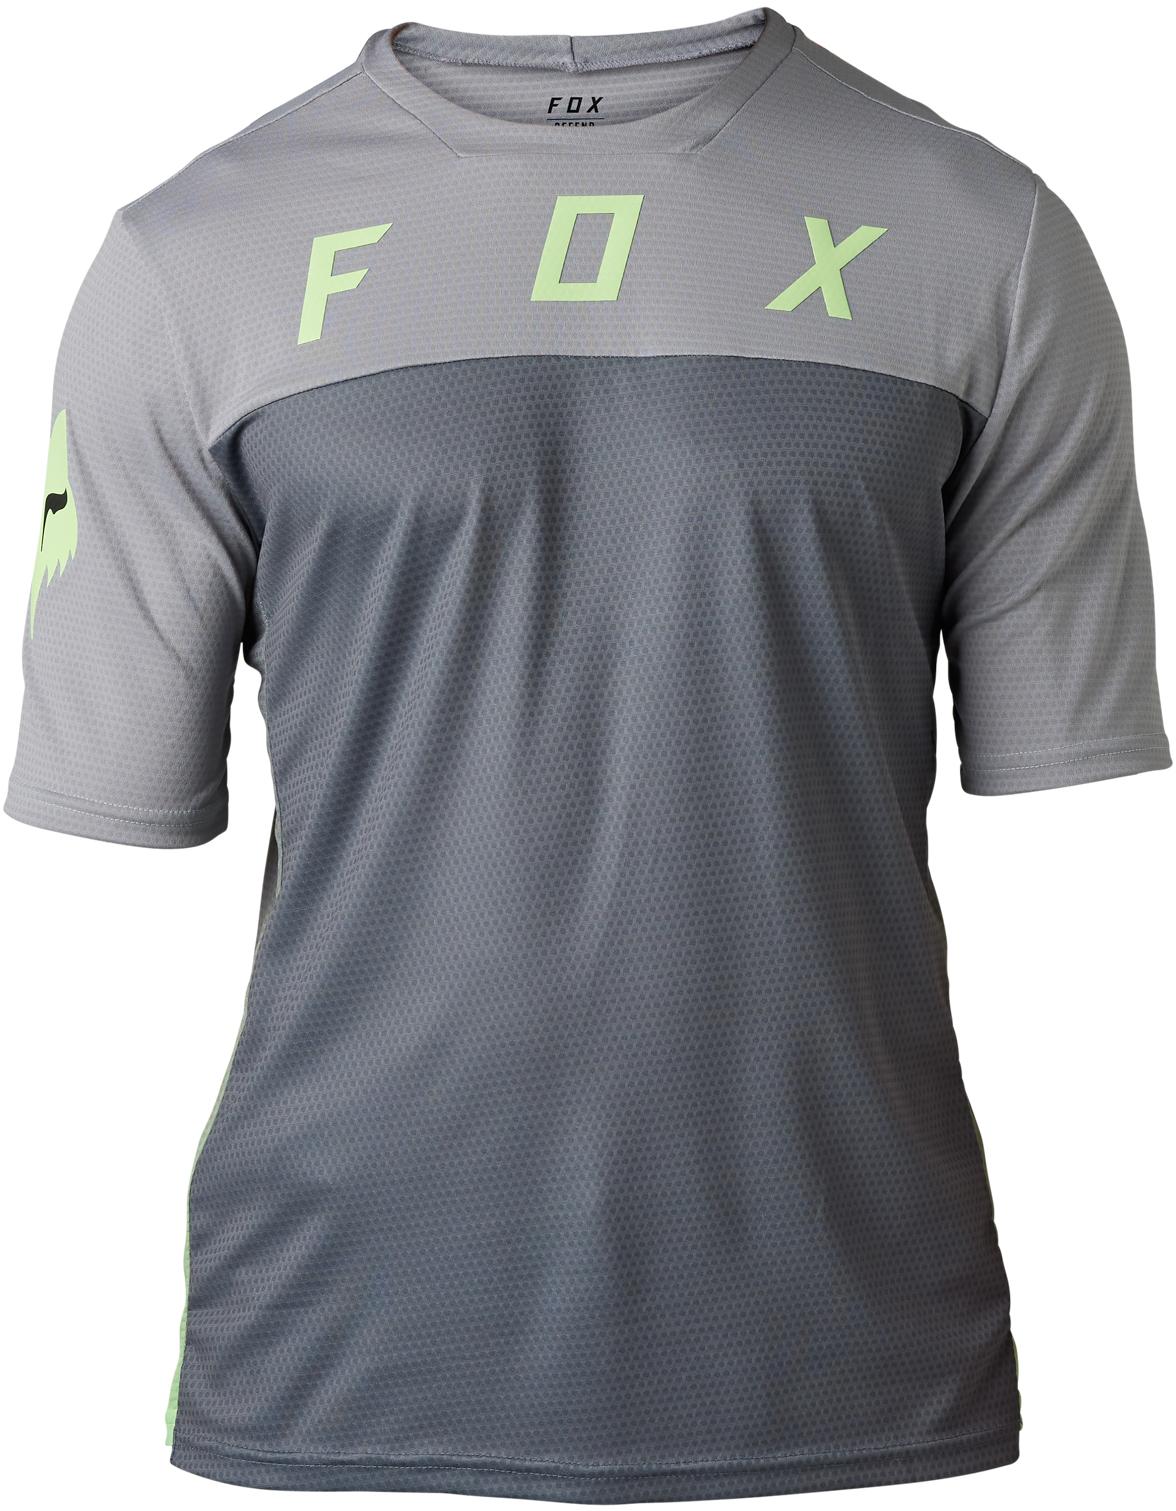 Fox Racing Defend Short Sleeve Jersey Cekt - Black/grey